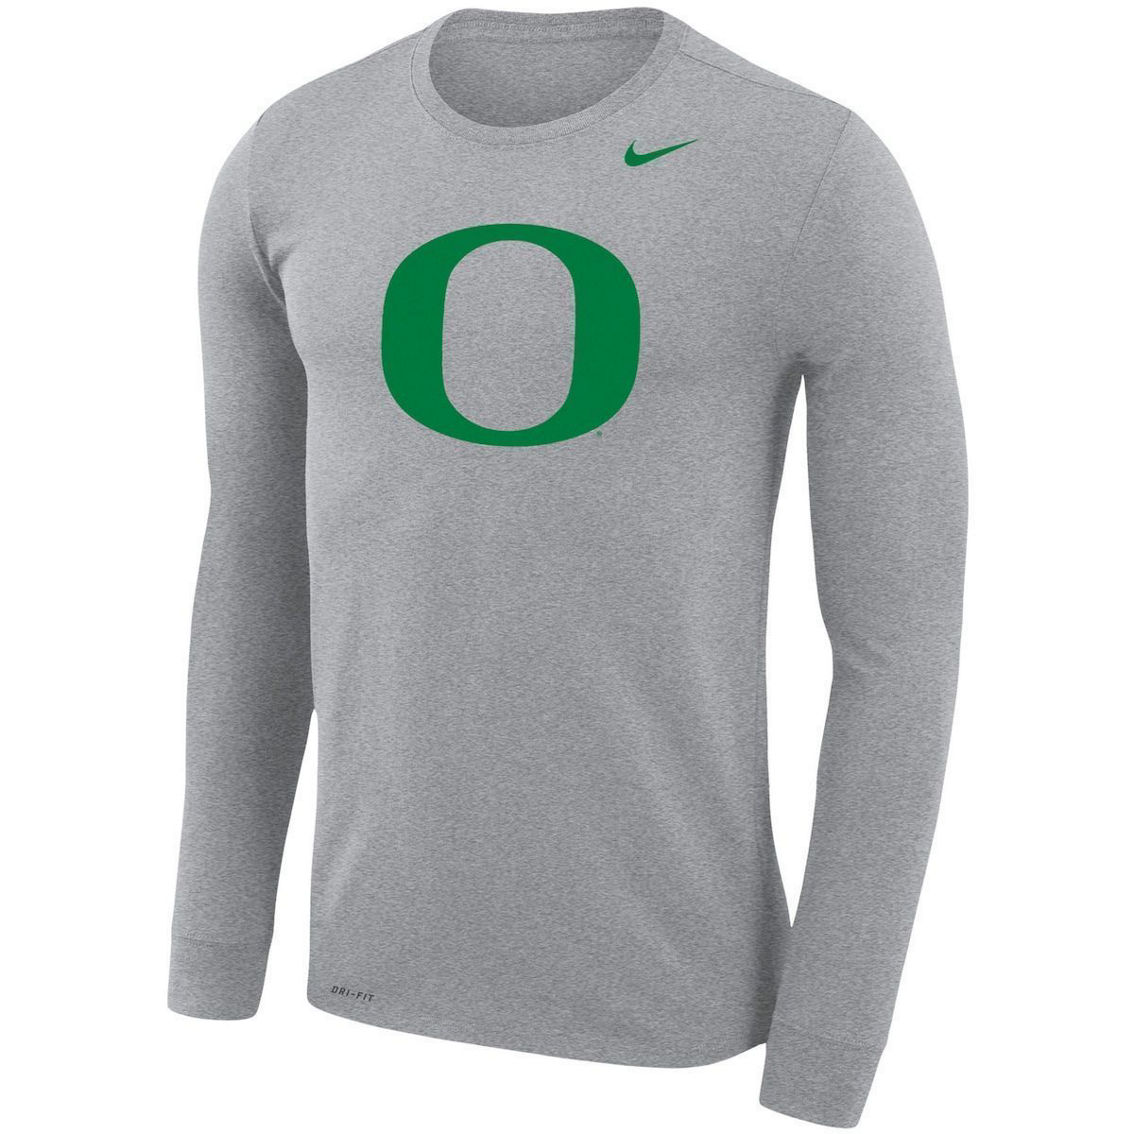 Men's Nike Heathered Gray Oregon Ducks School Logo Legend Performance Long Sleeve T-Shirt - Image 3 of 4